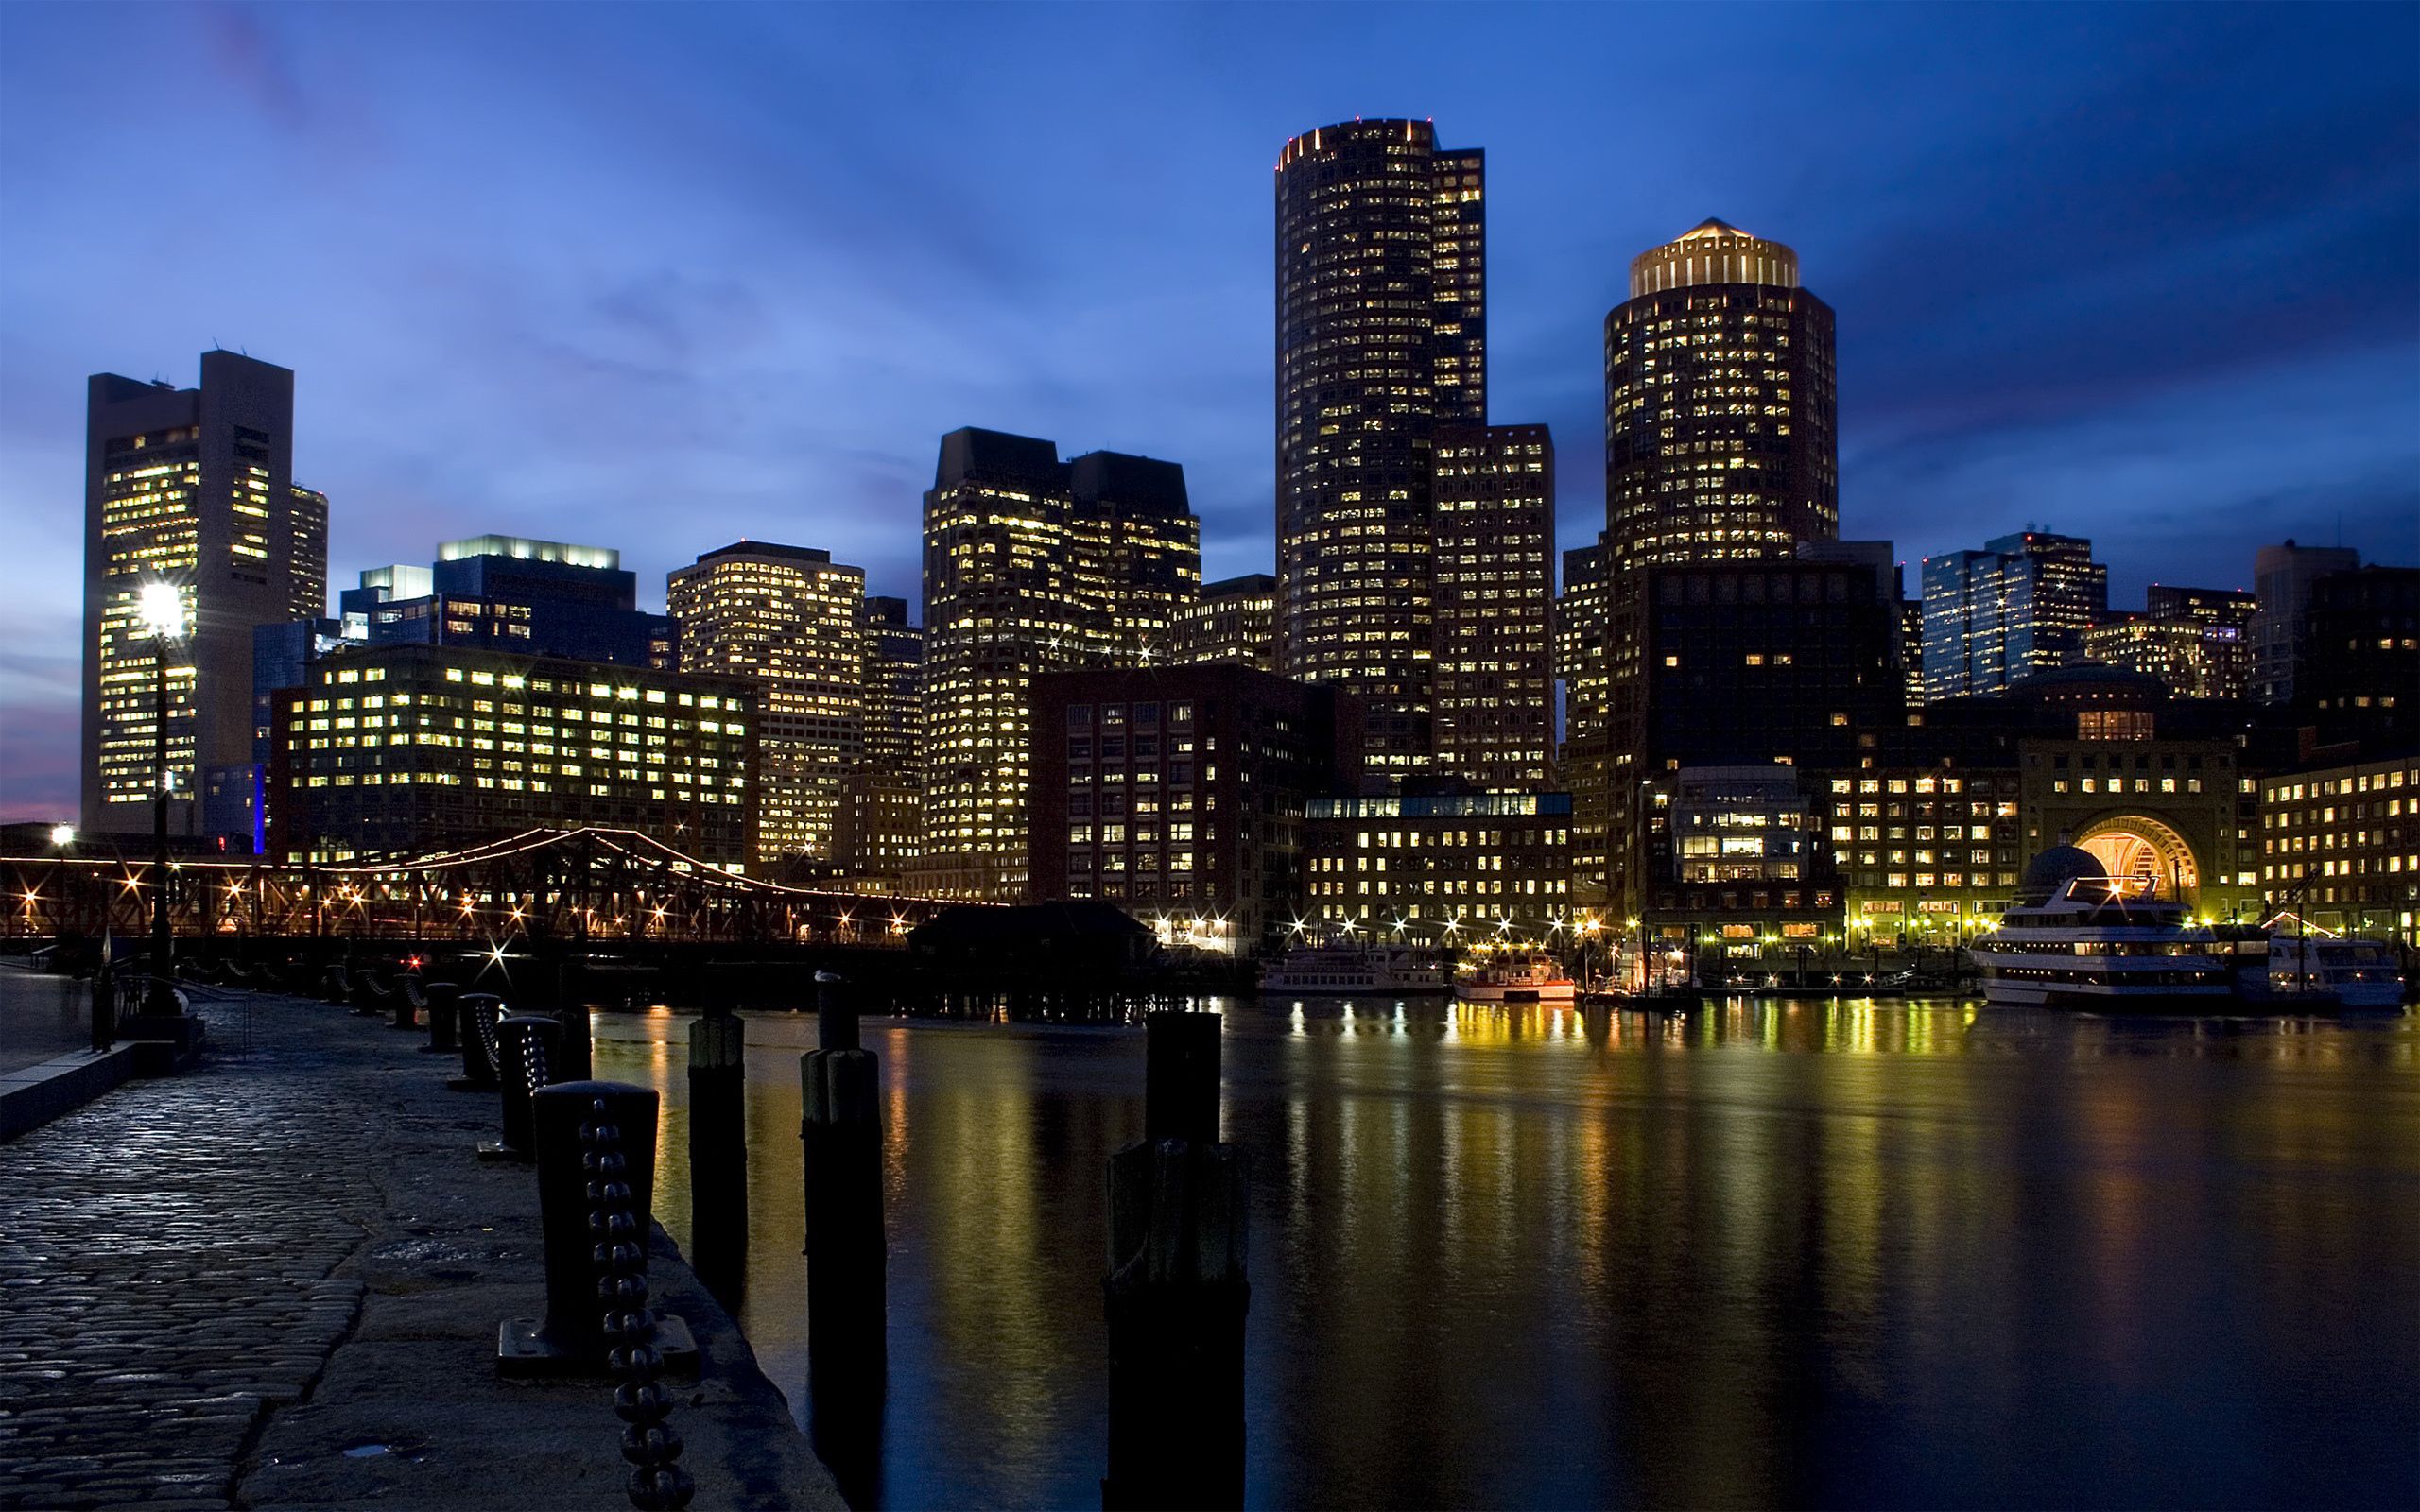 cities, rivers, silence, loneliness, urban landscape, cityscape, coziness, comfort, calmness, tranquillity, boston